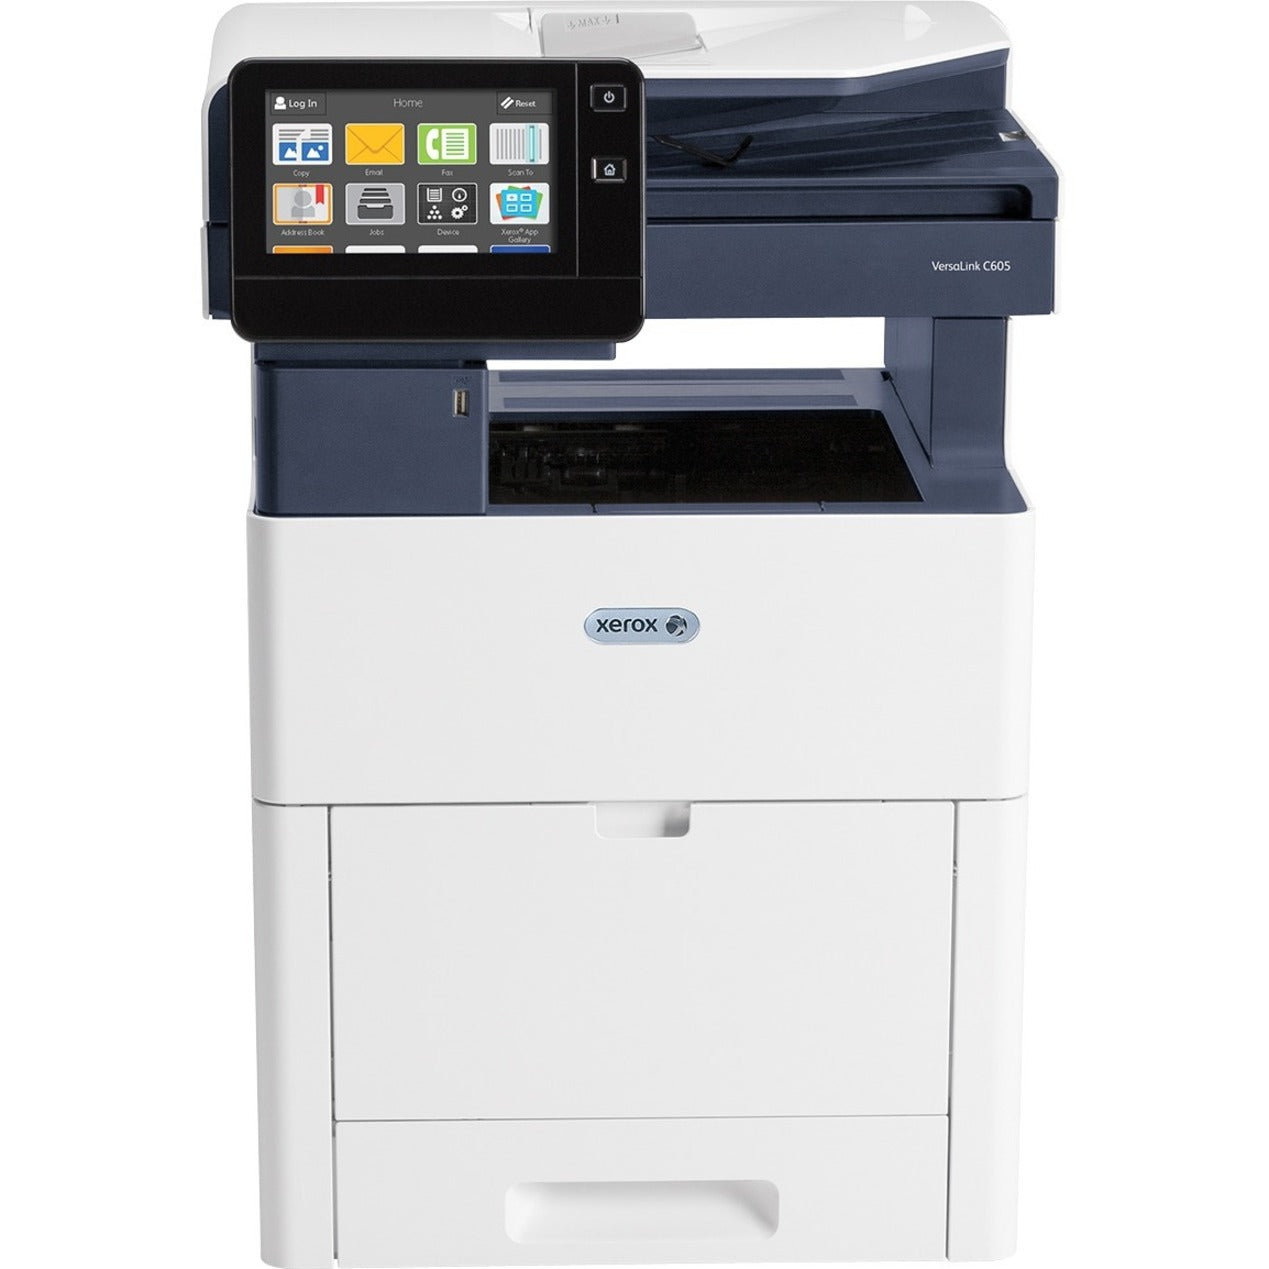 Xerox C605/XL VersaLink C605 Color Multifunction Printer, 55 ppm, 1200 x 2400 dpi, 1 Year Warranty